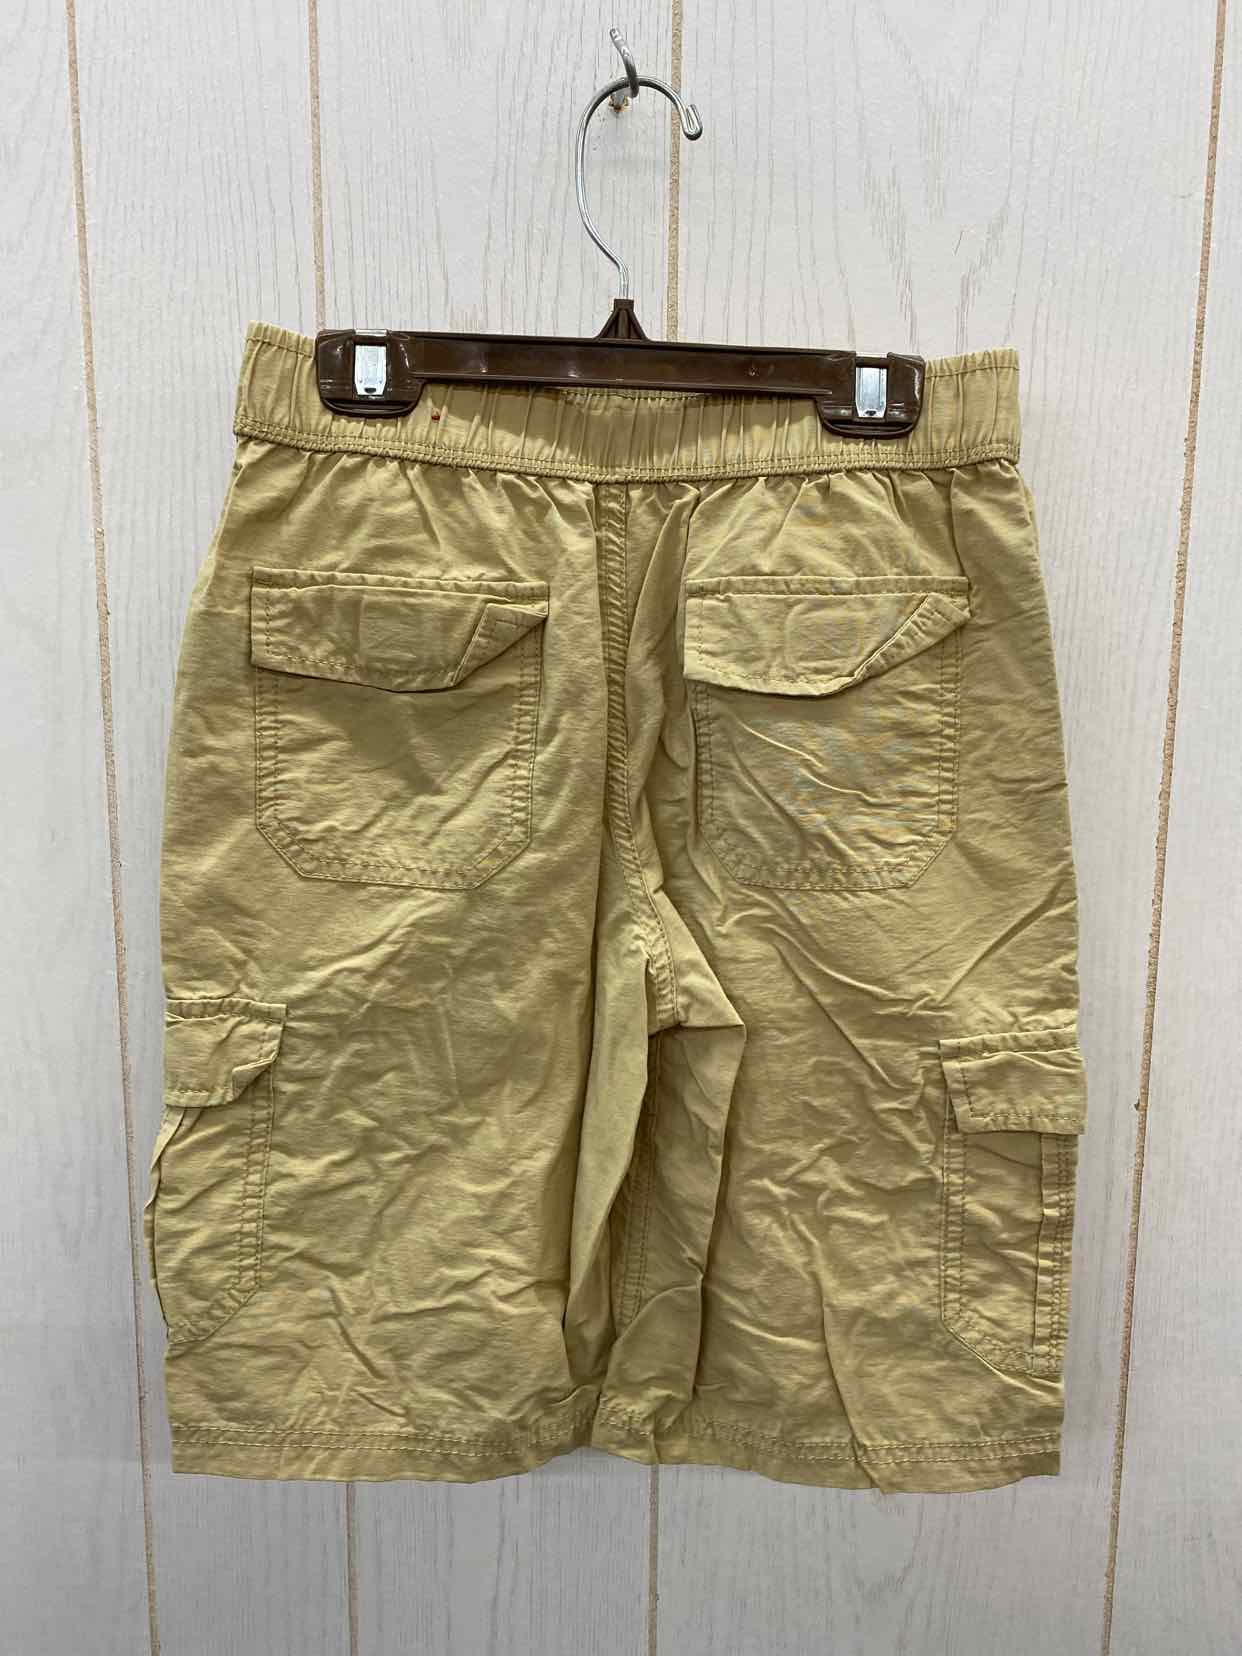 Arizona Boys Size 14 Shorts